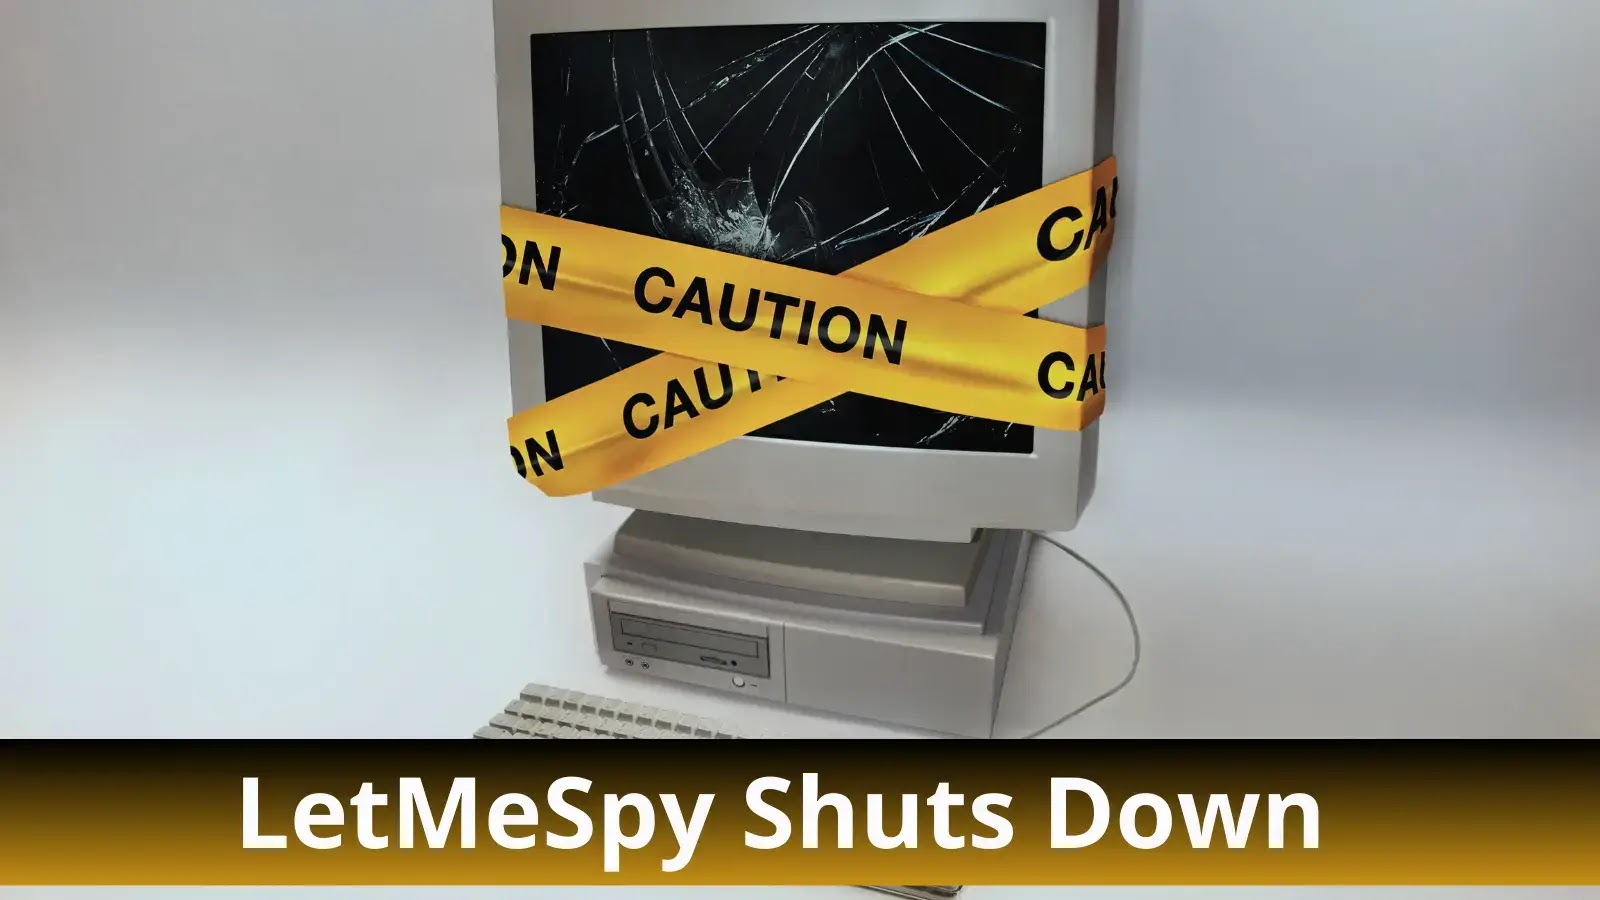 Spyware Provider “LetMeSpy” Shuts Down After Hacker Deletes Server Data